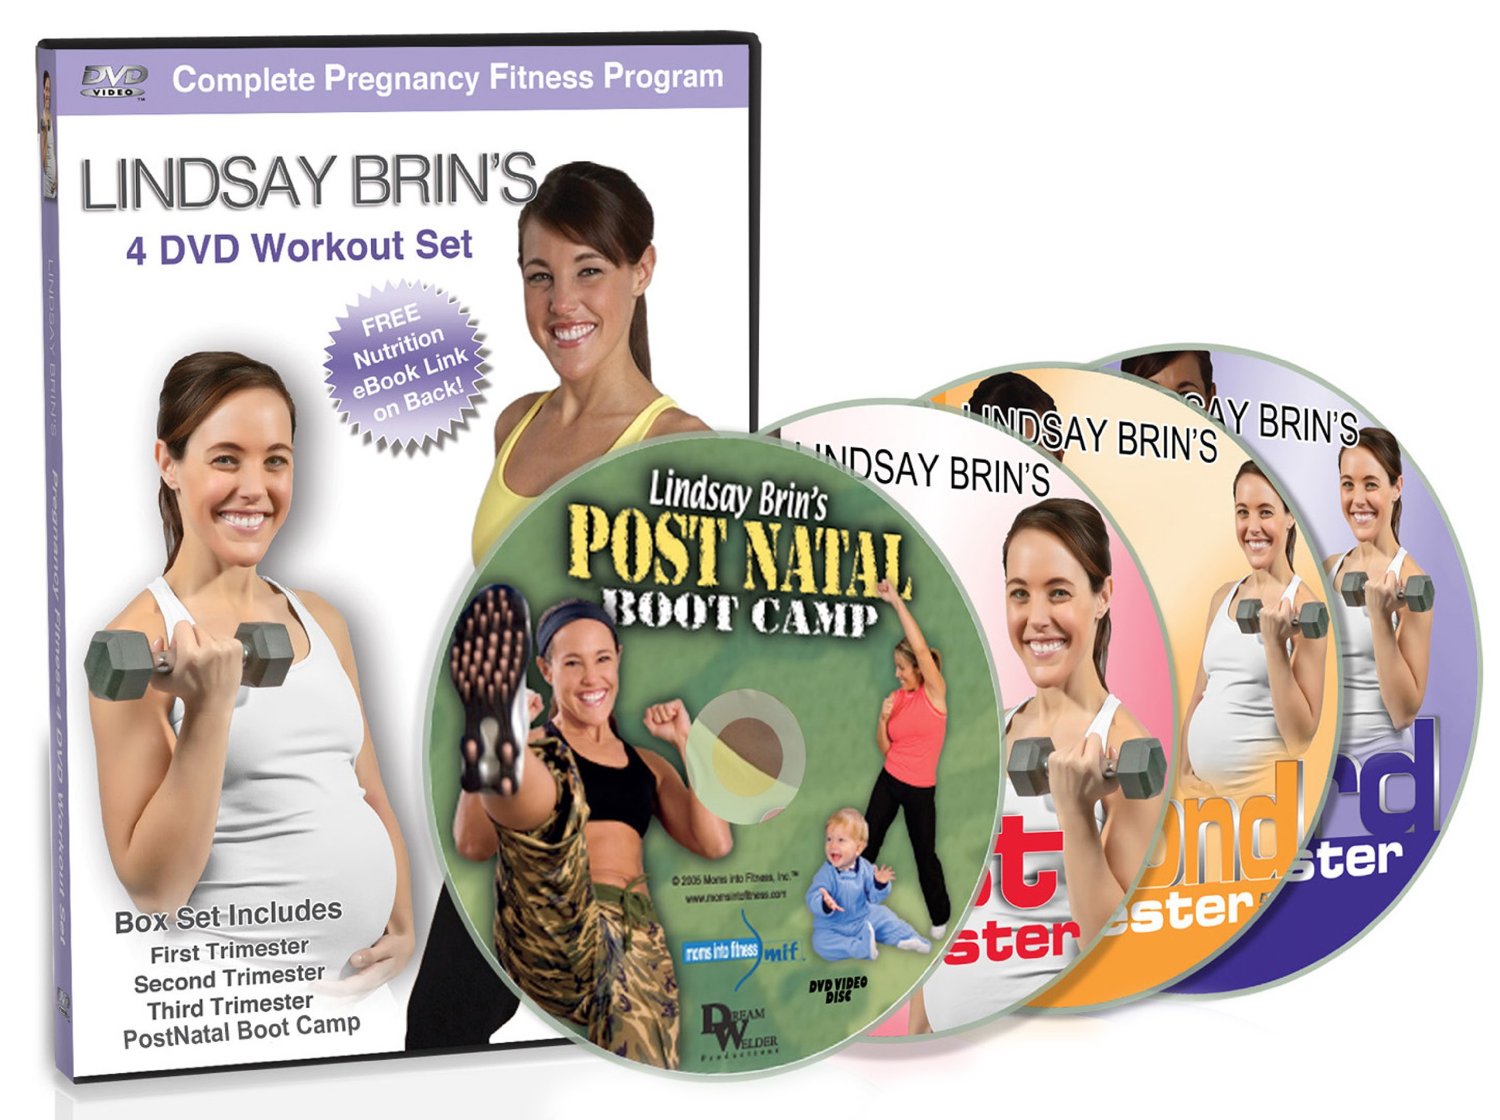 Lindsay Brin's Workout DVD's for Pregnancy